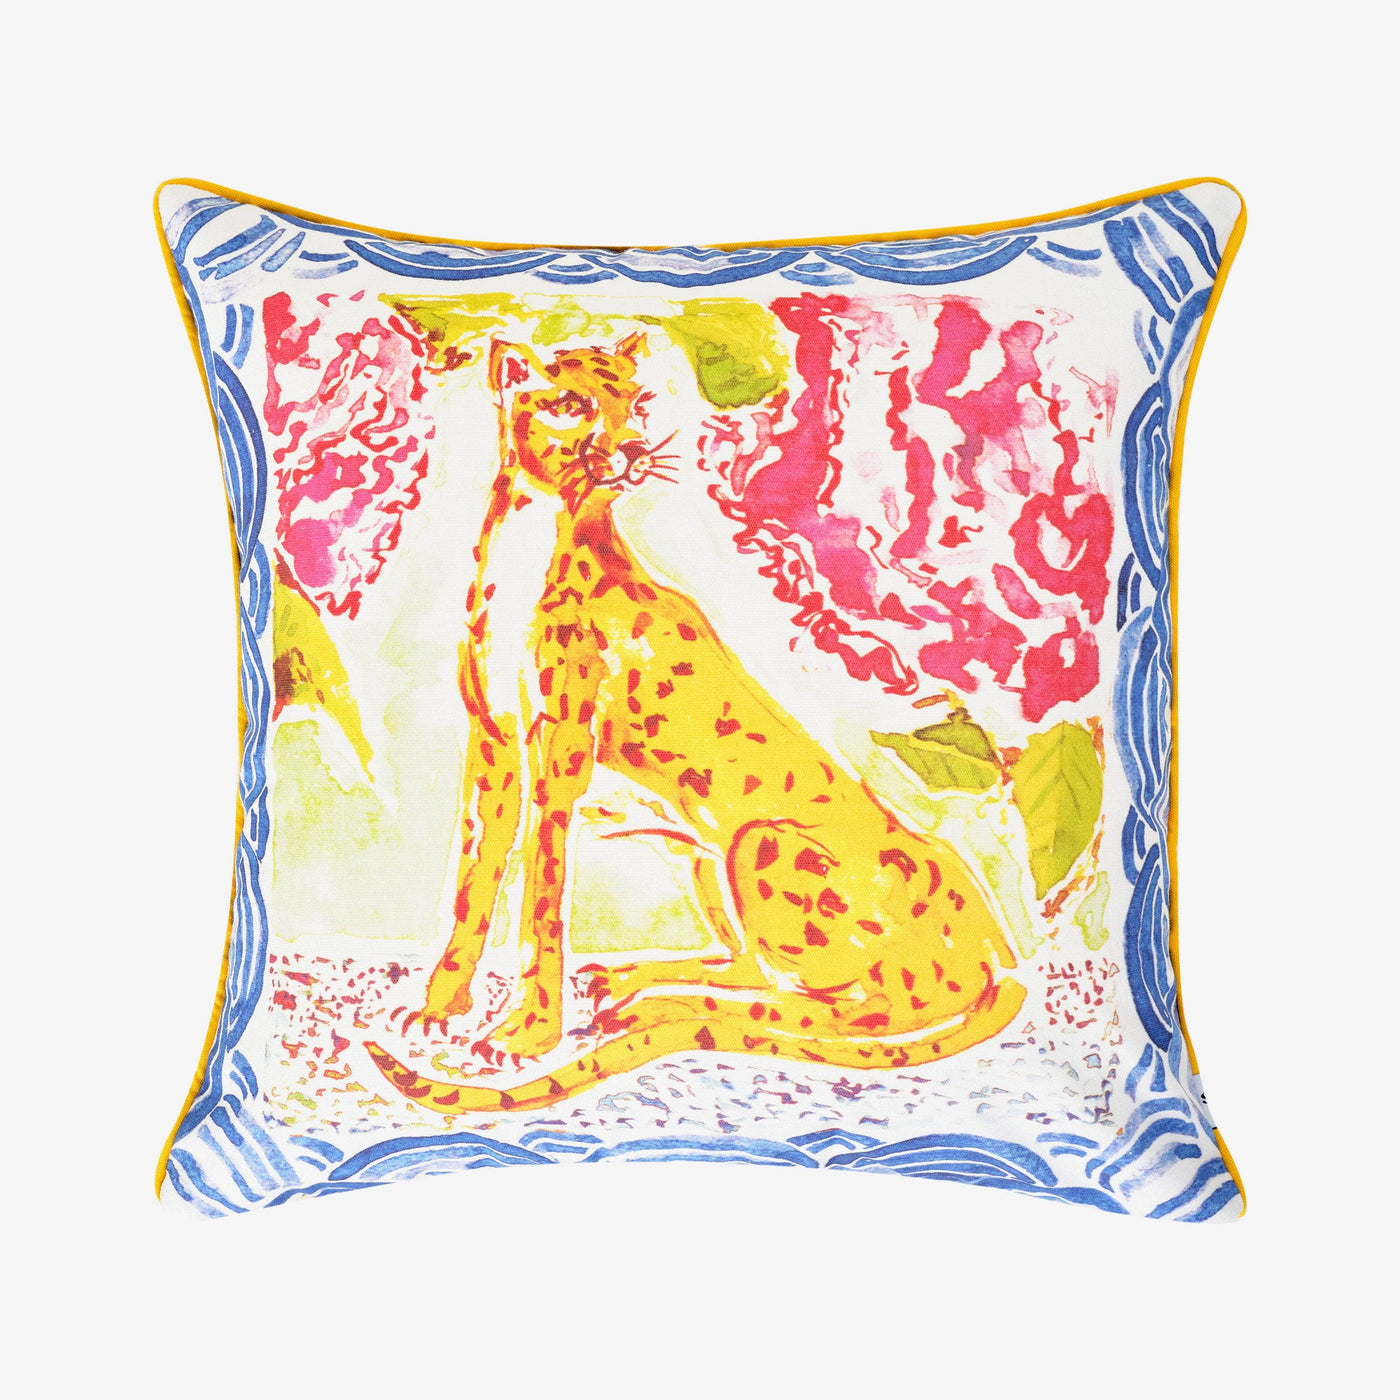 Tansy Cushion Cover, Multicoloured, 50x50 cm 1